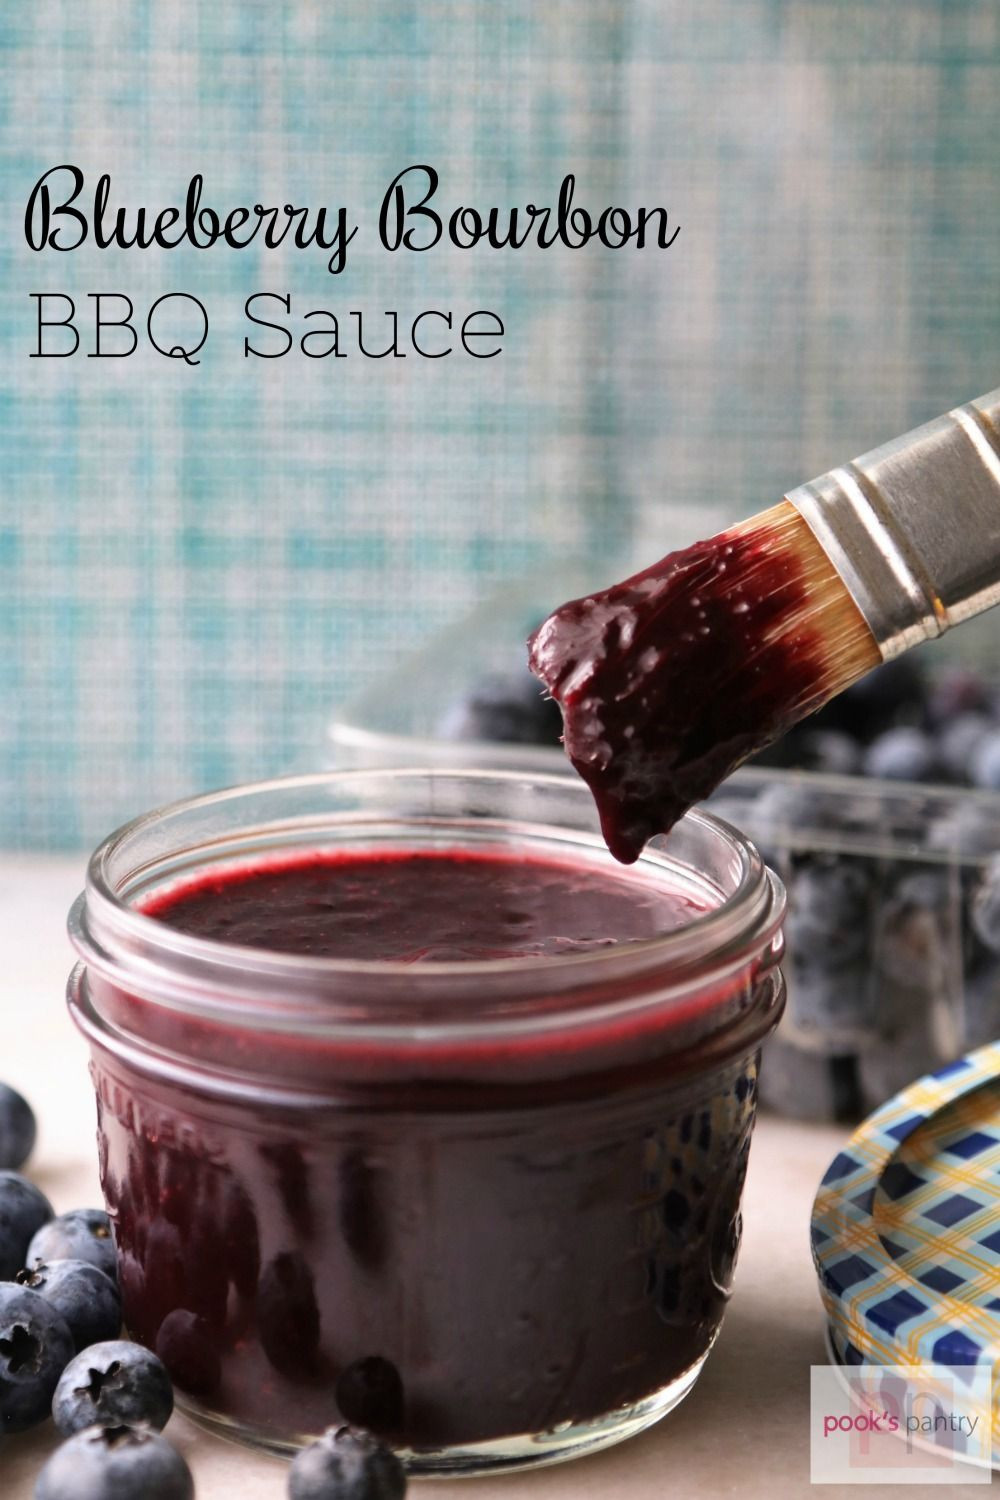 Blueberry Bbq Sauce Recipe
 Blueberry Bourbon BBQ Sauce Recipe